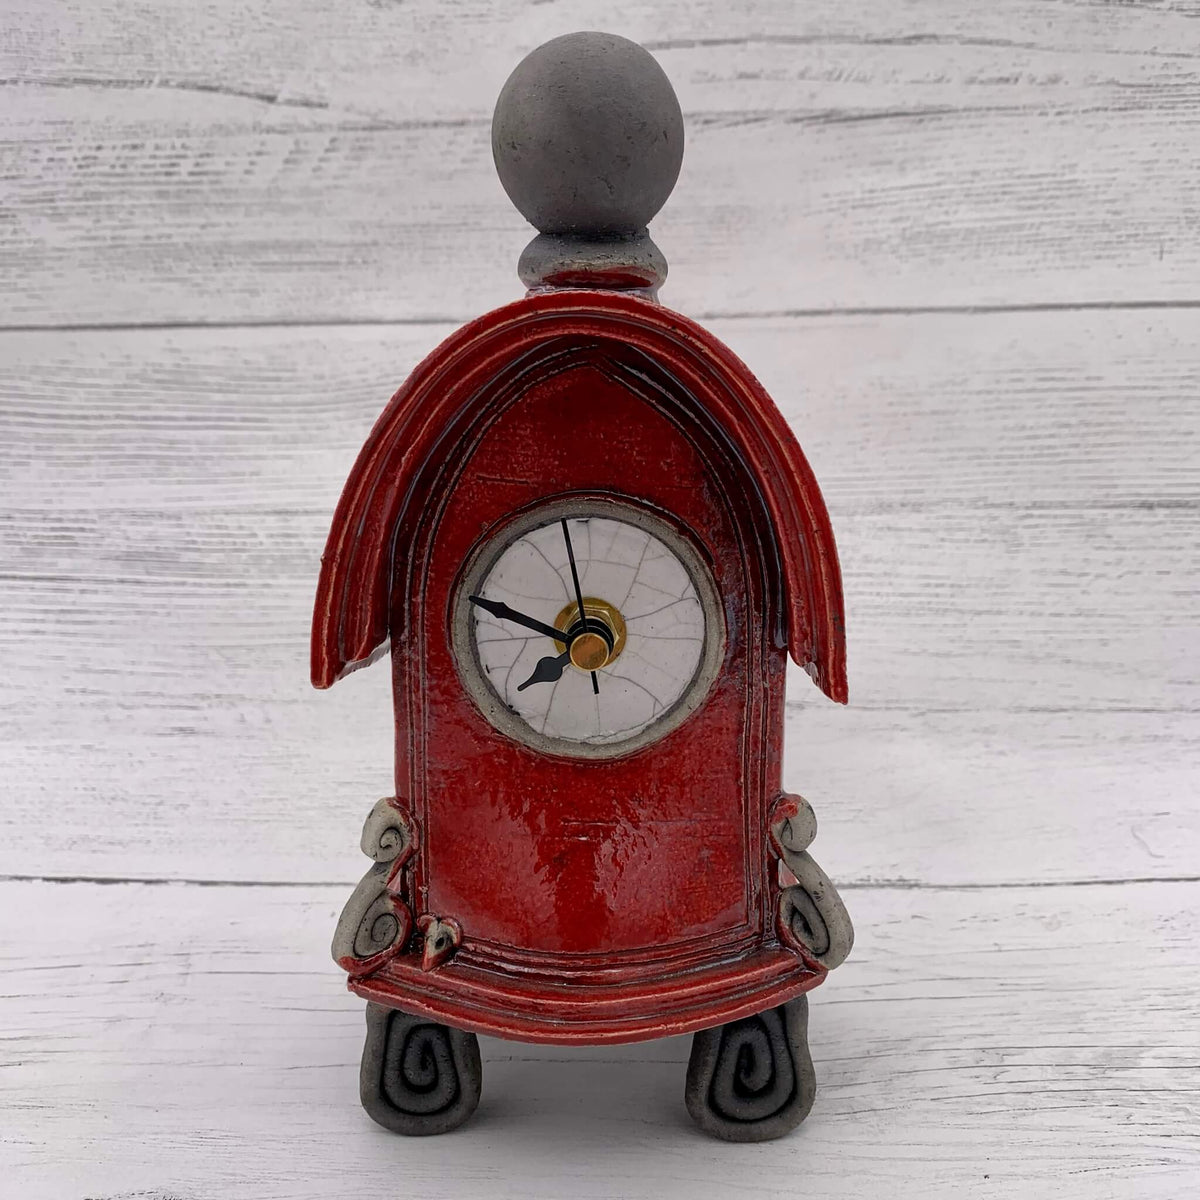 Ceramic raku fired red clock, handmade by stonesplitter in the UK.